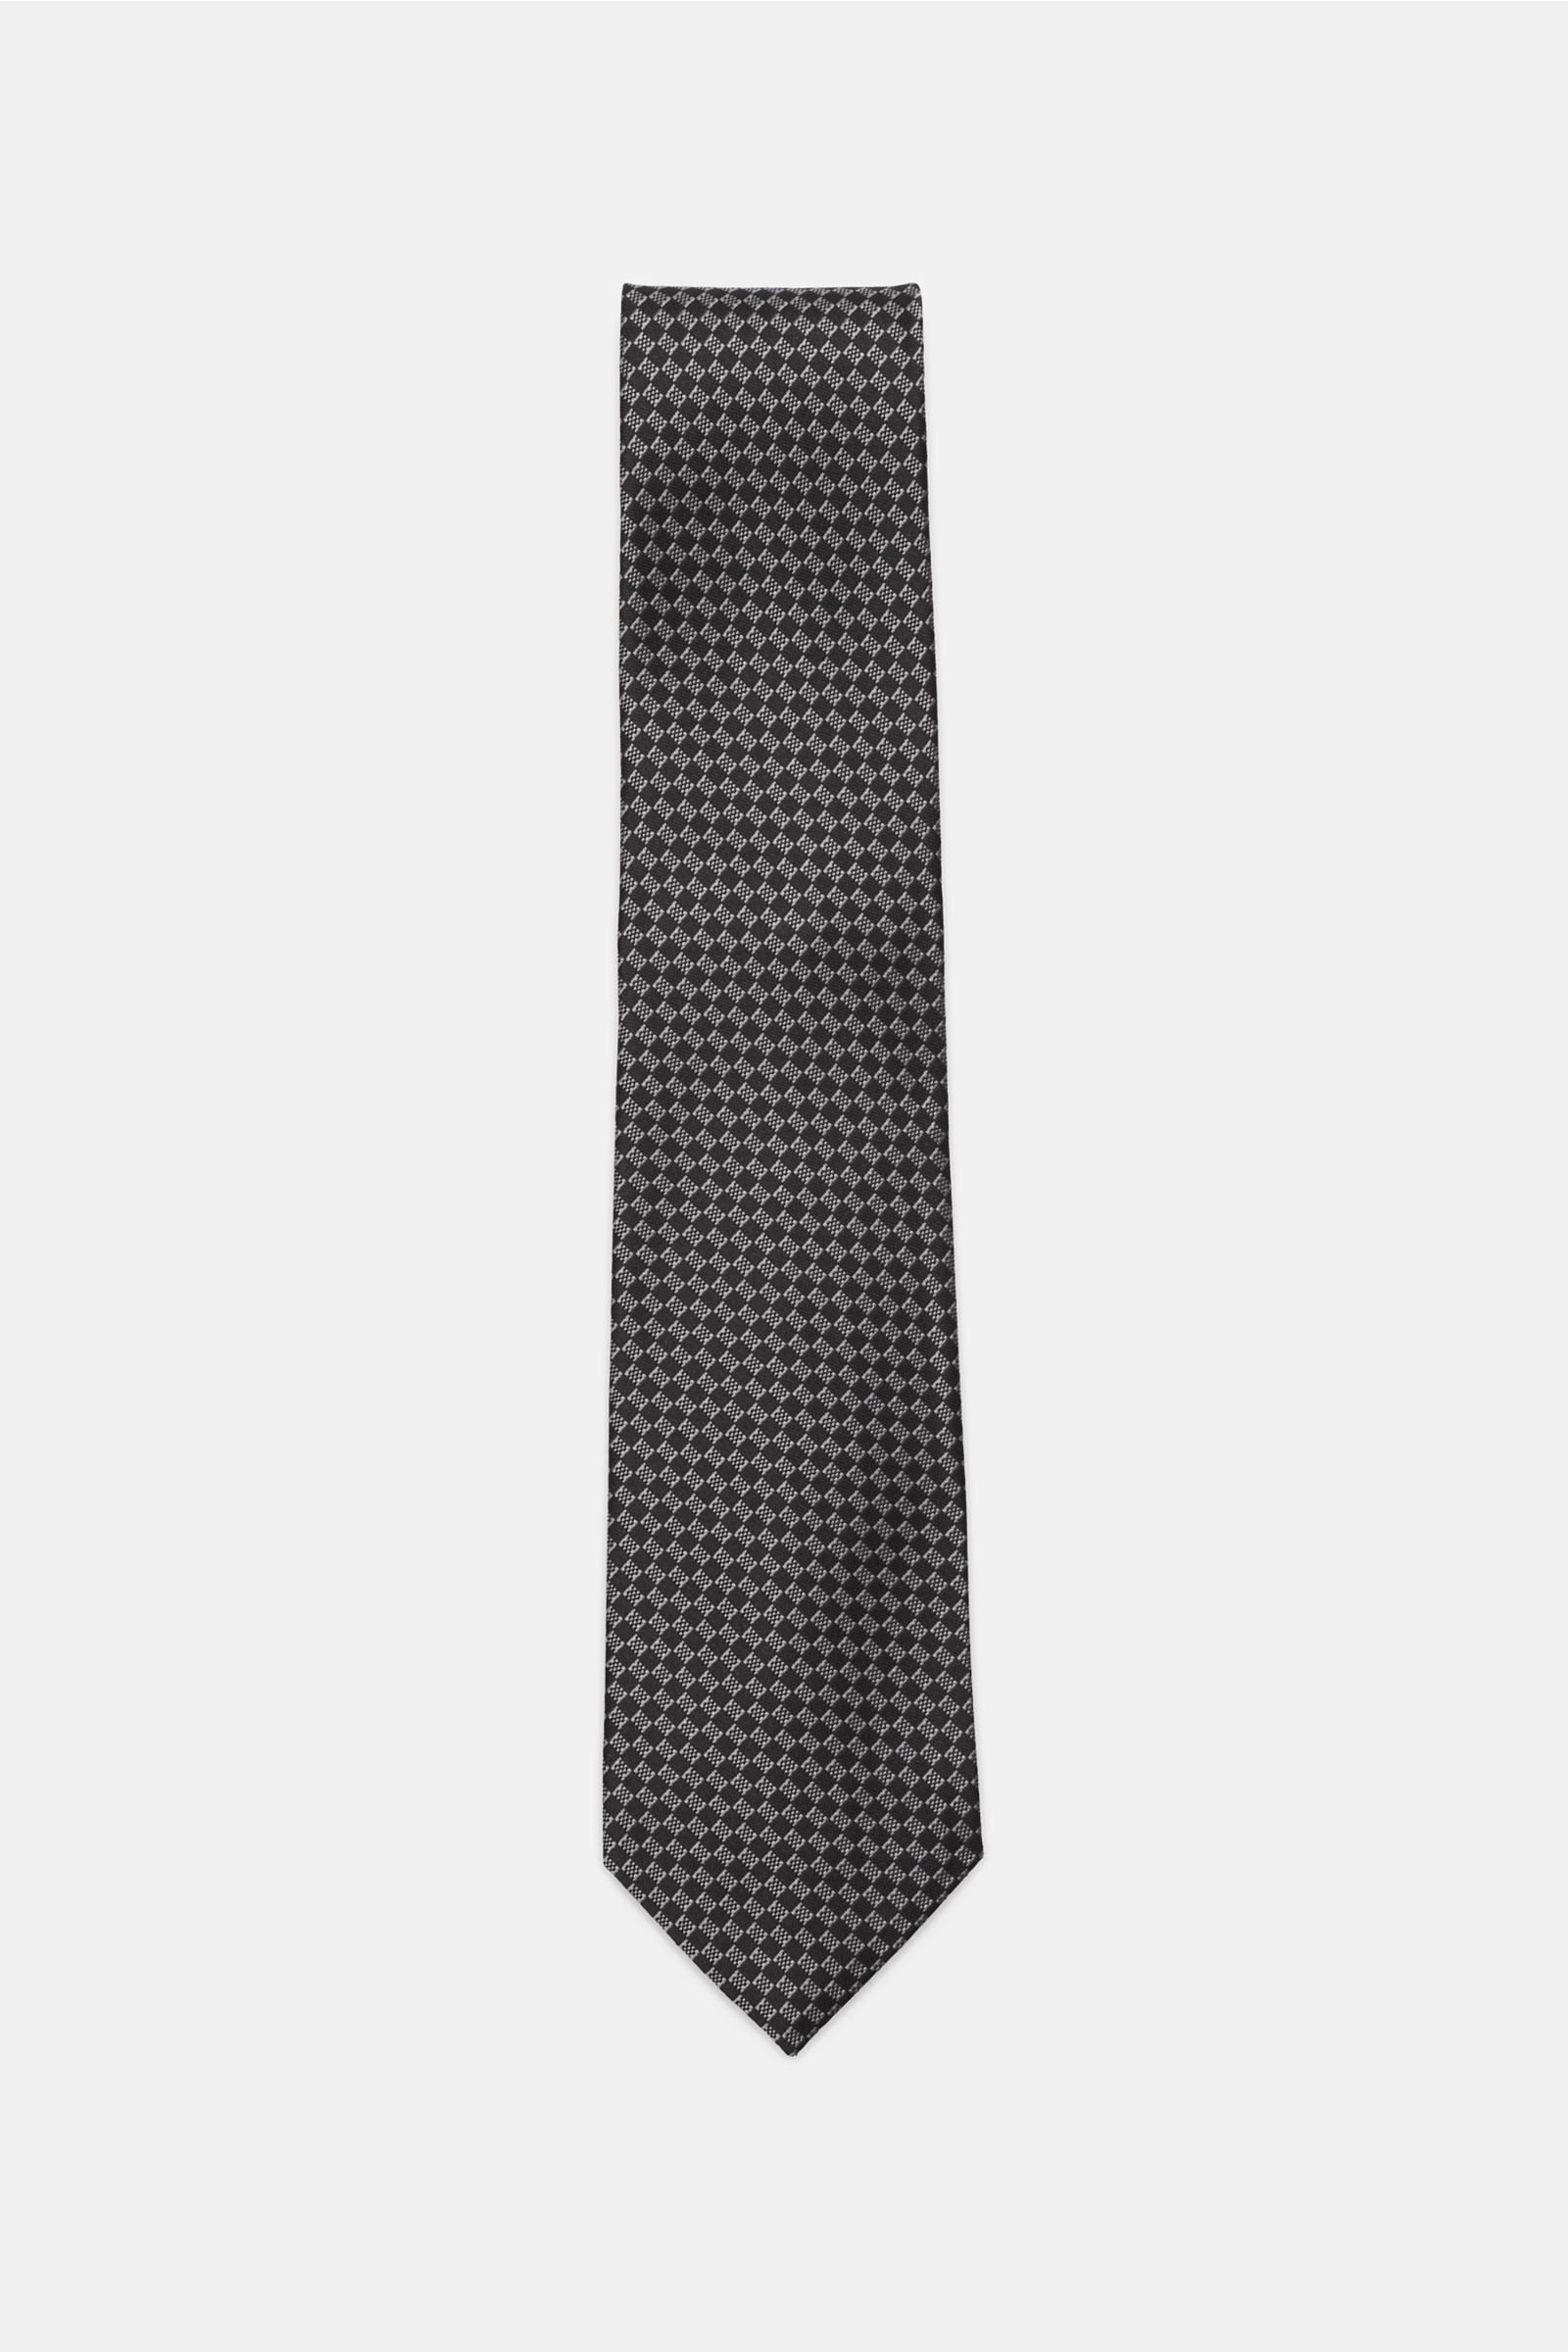 Silk tie dark grey/black checked